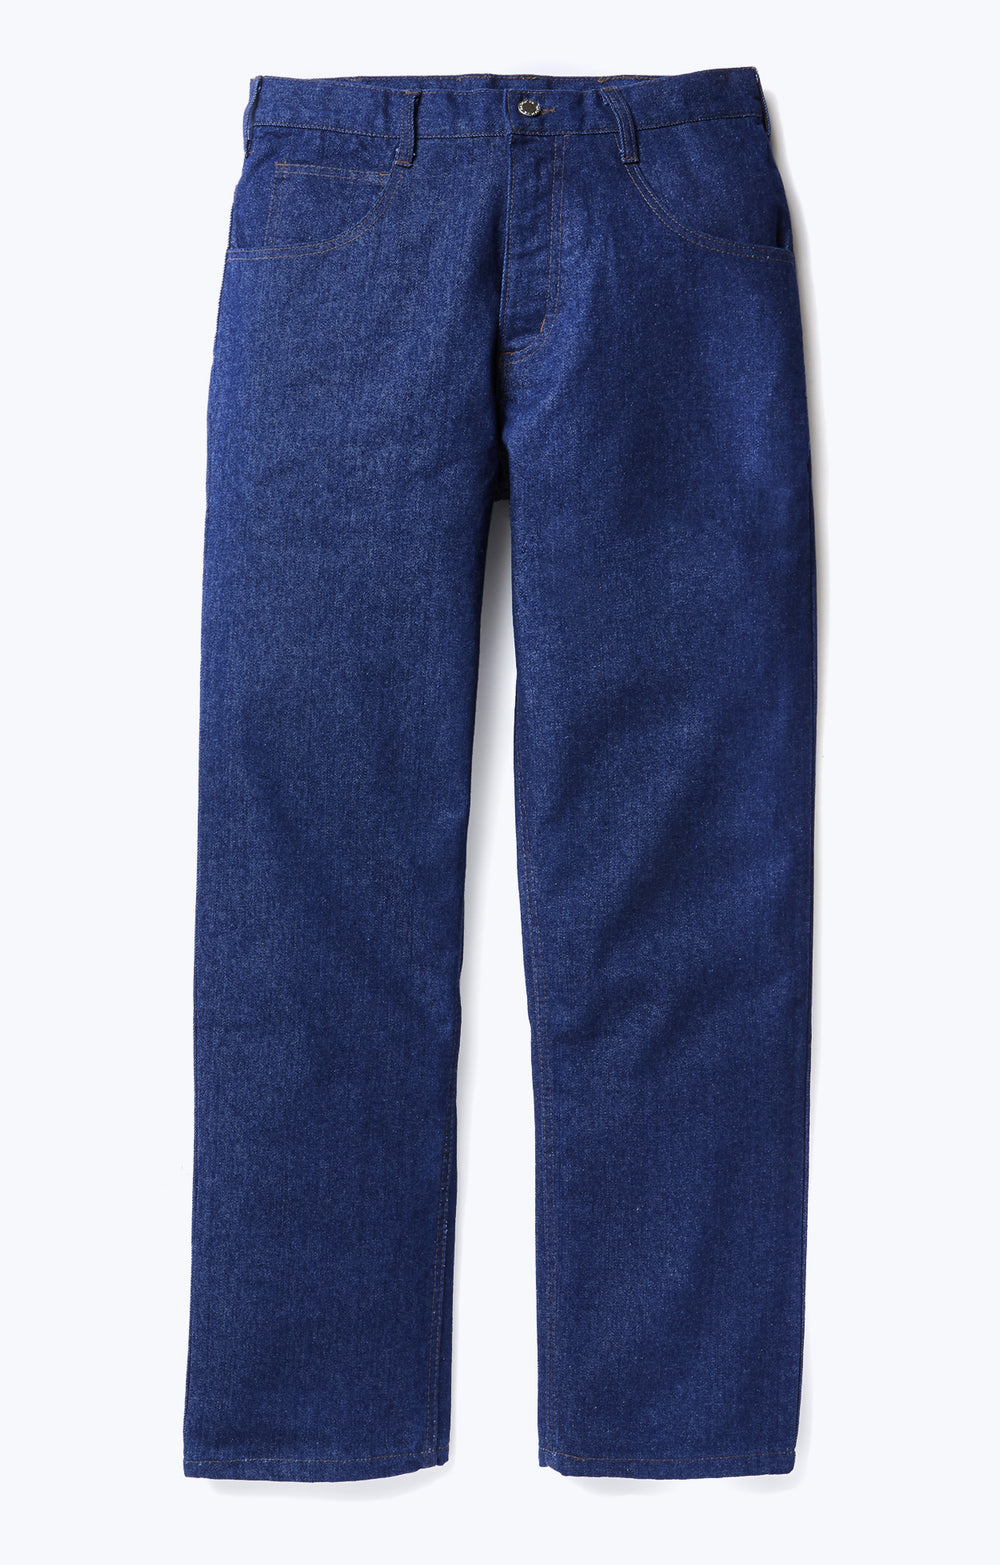 Rasco FR FR4622 Classic Fit Denim Jeans